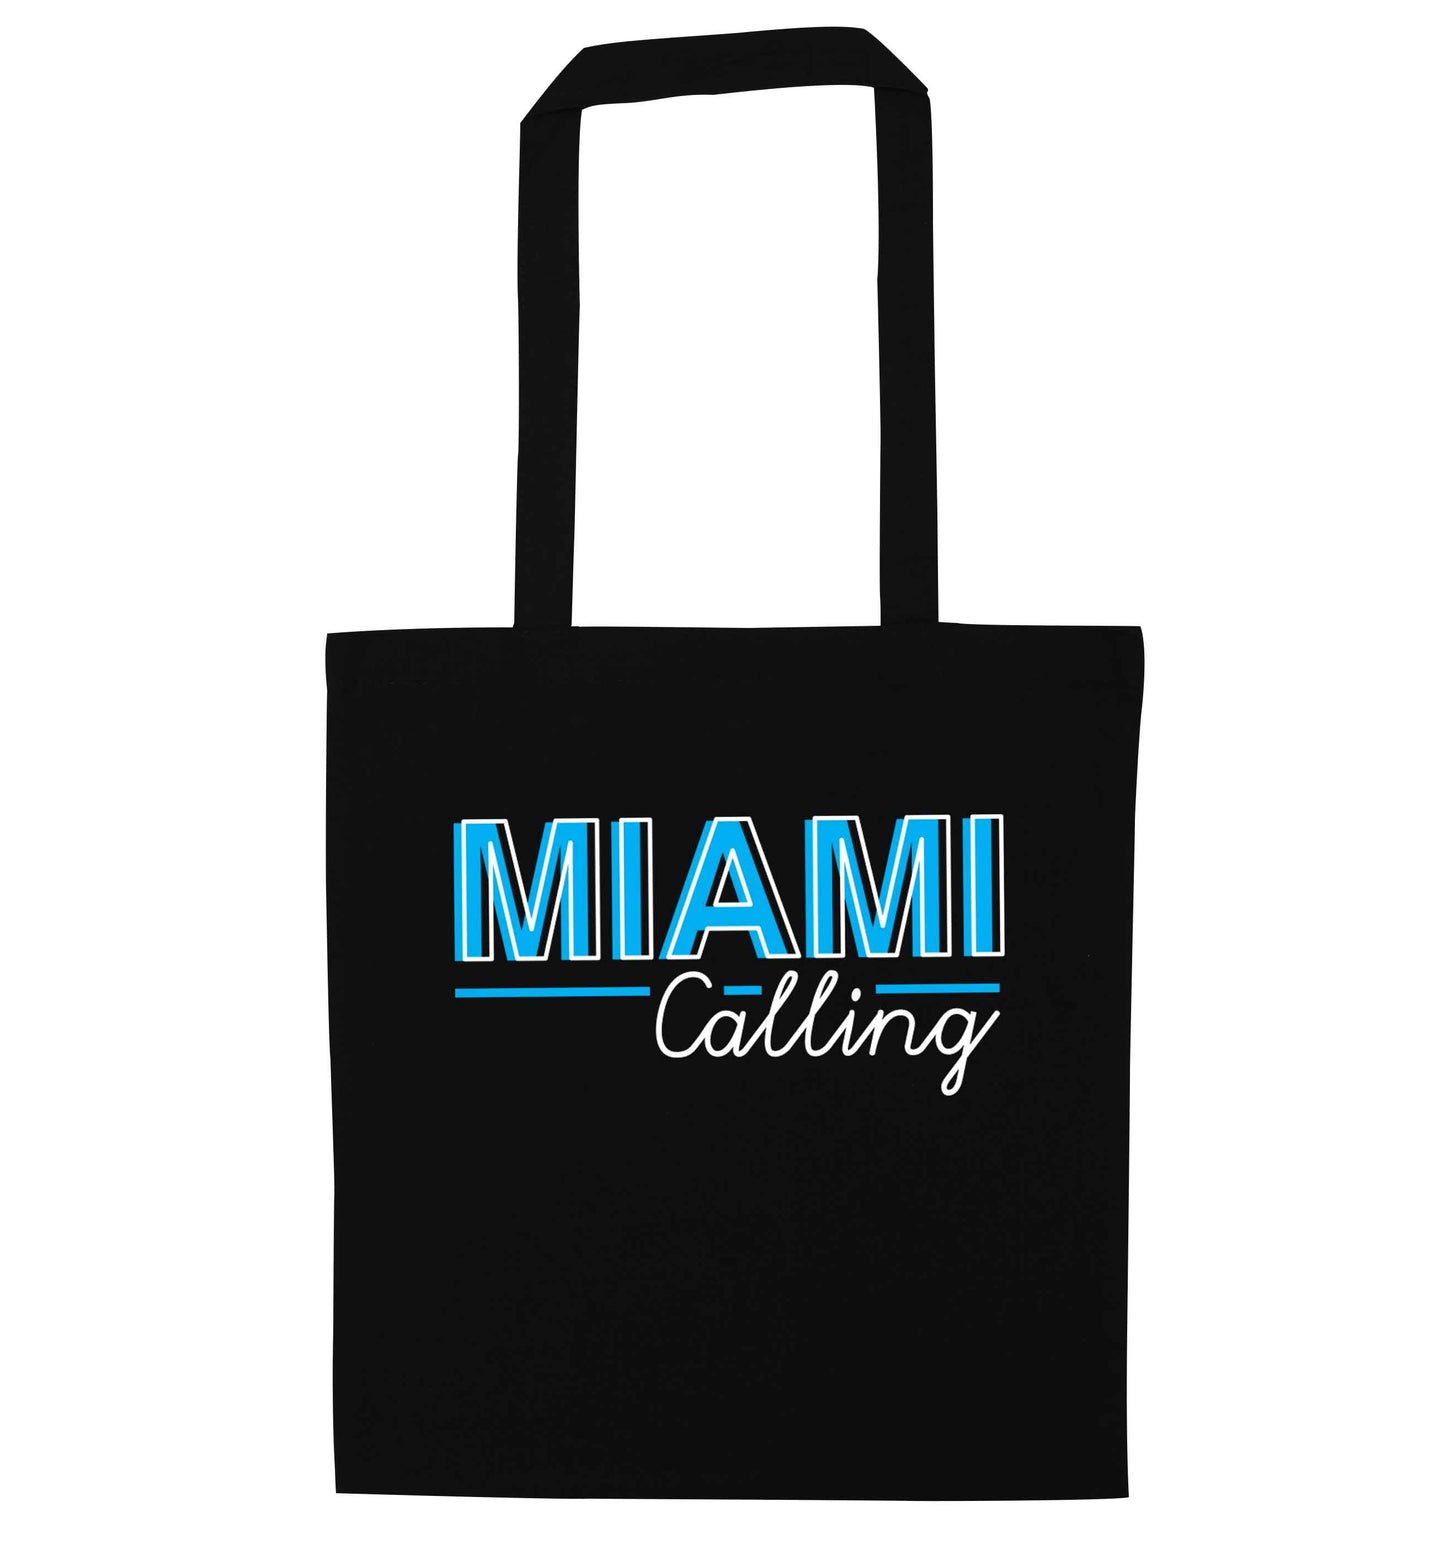 Miami calling black tote bag